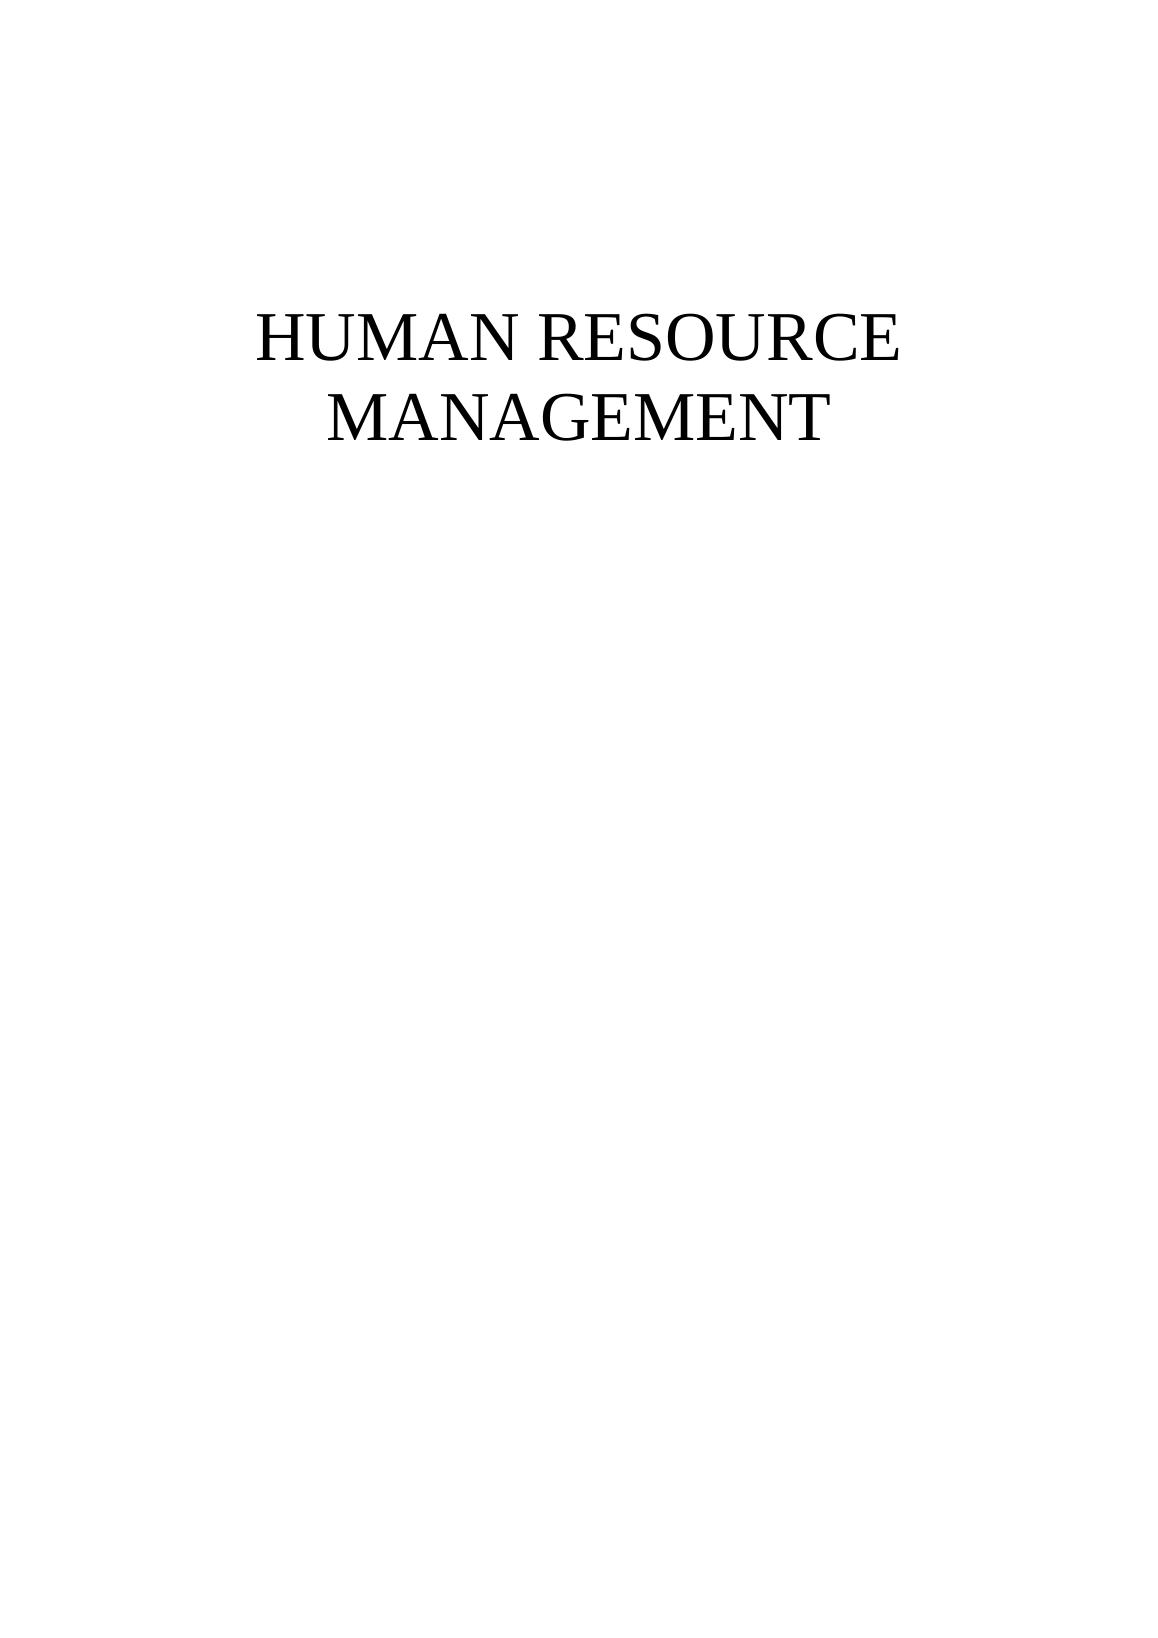 Human Resources Management At Harrods_1